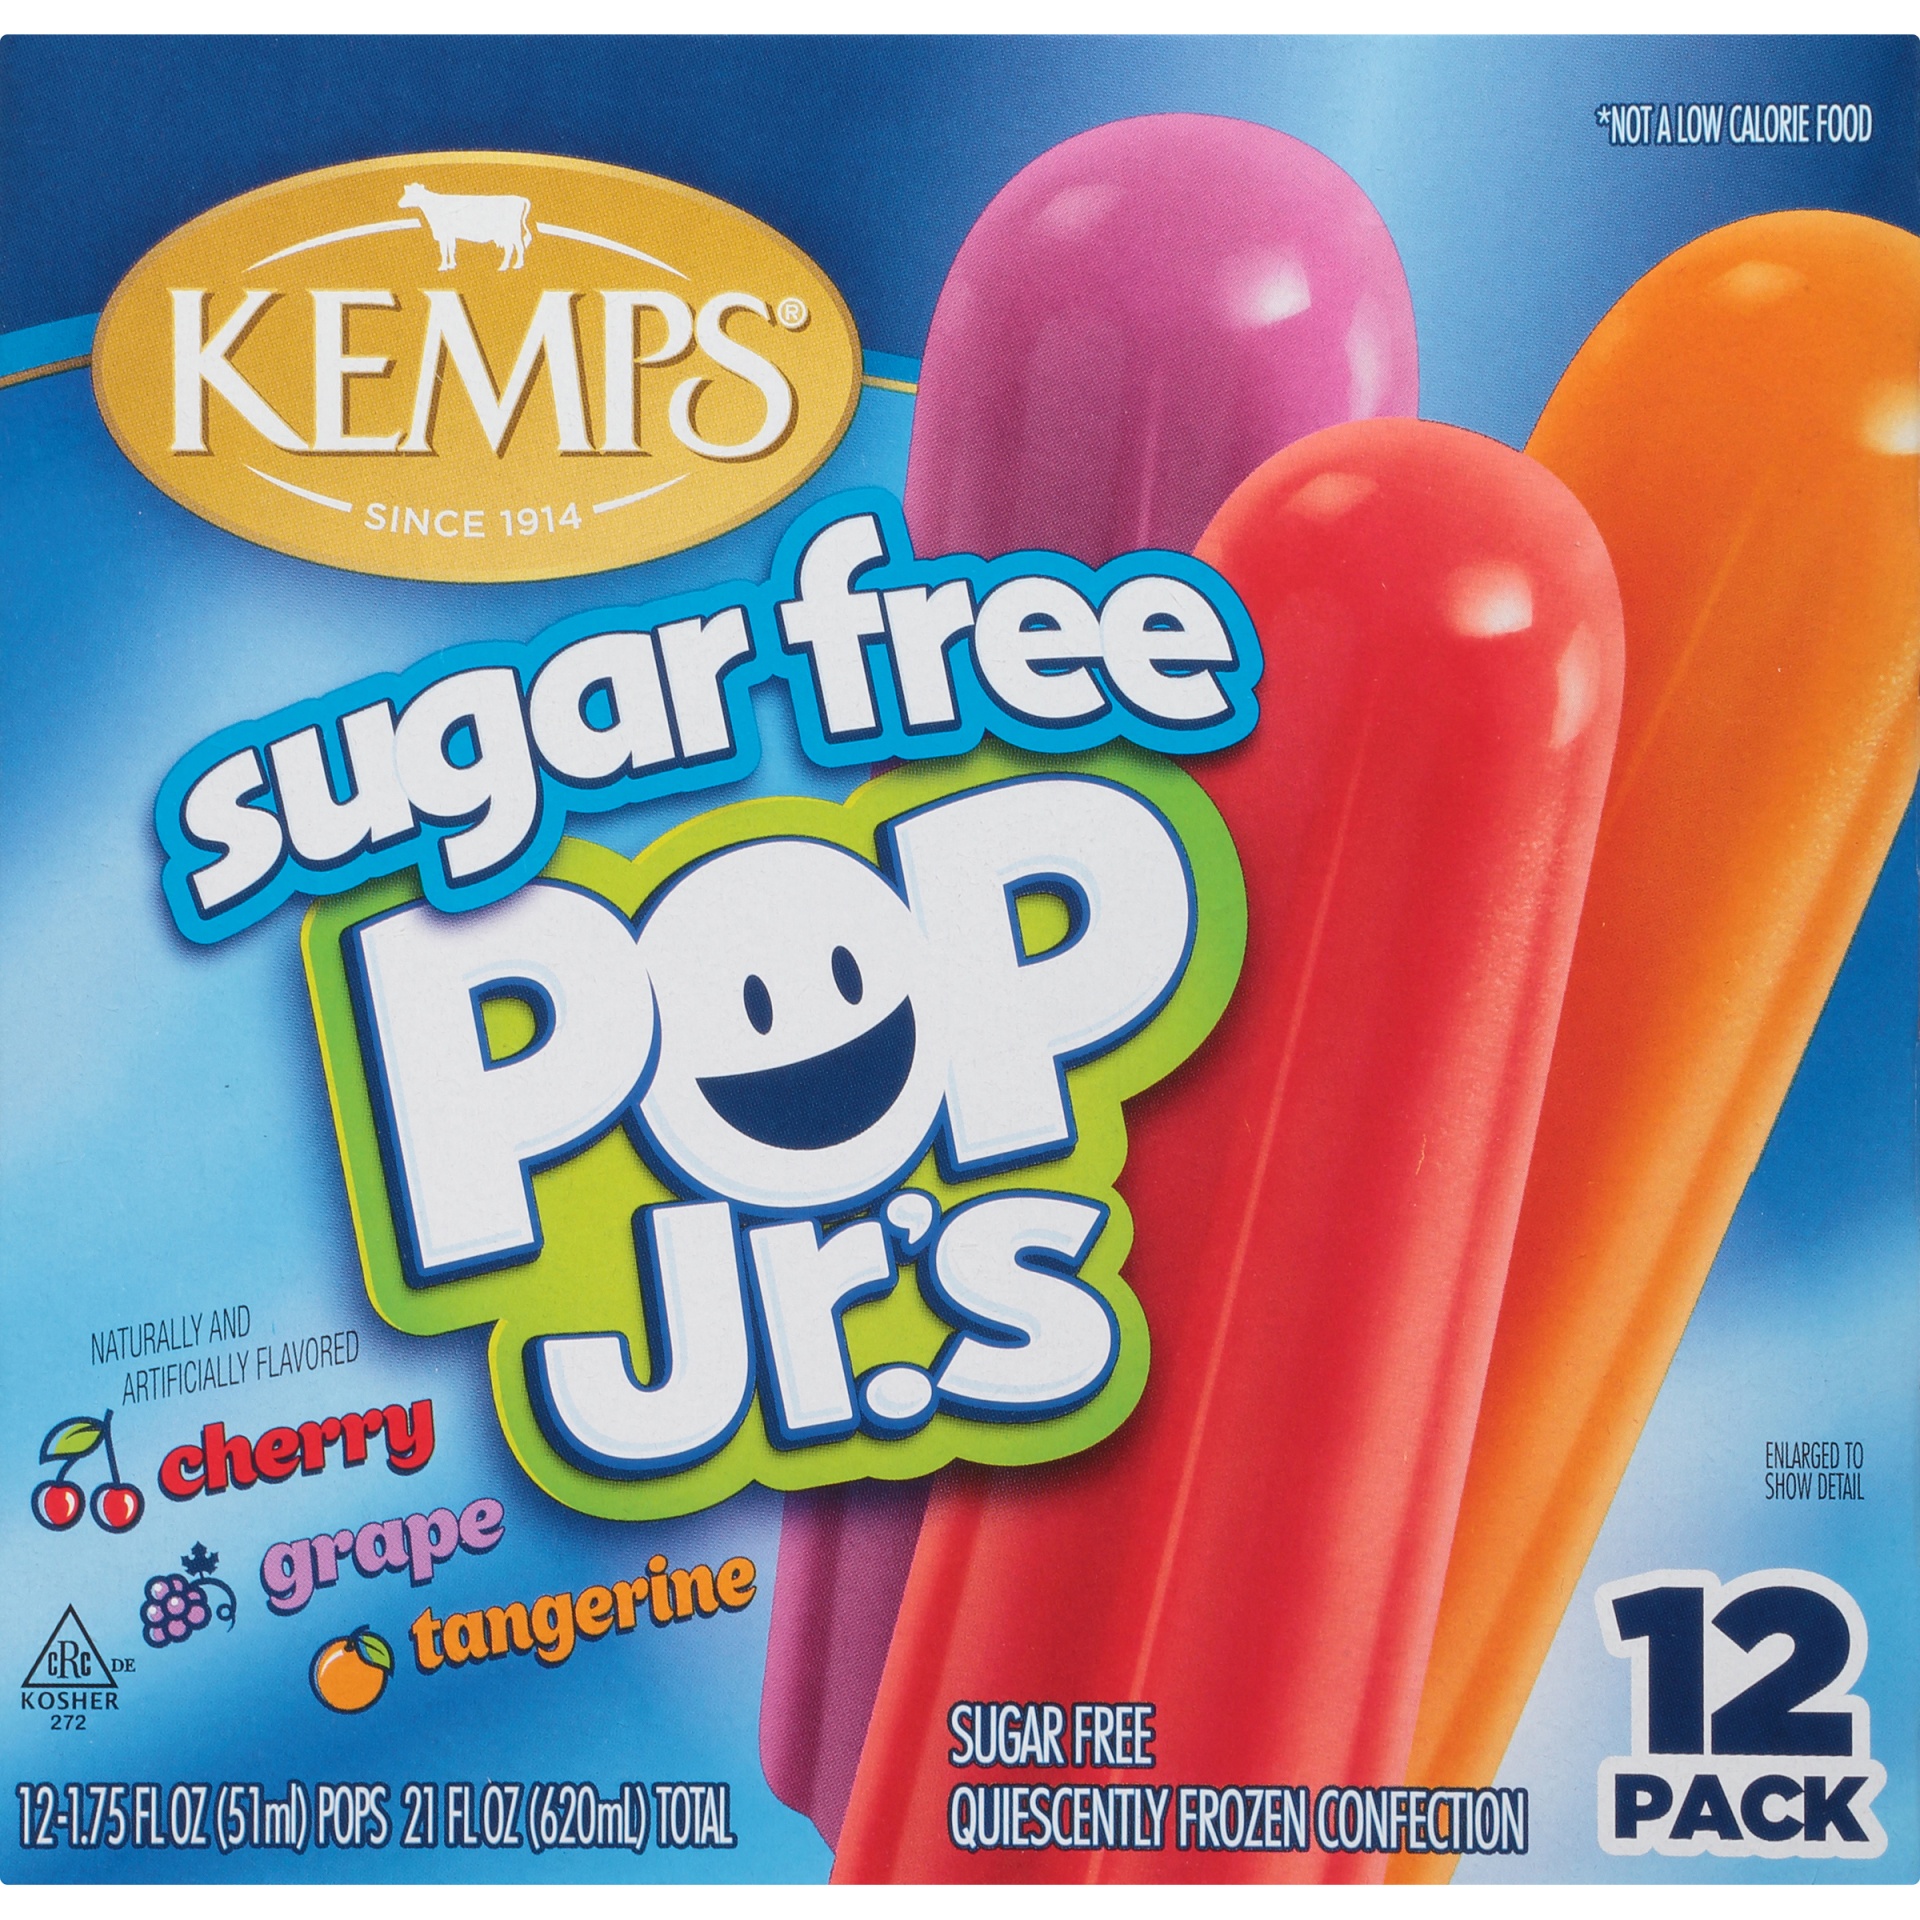 slide 3 of 8, Kemps Sugar-Free Pop Jr.'s, 12 ct